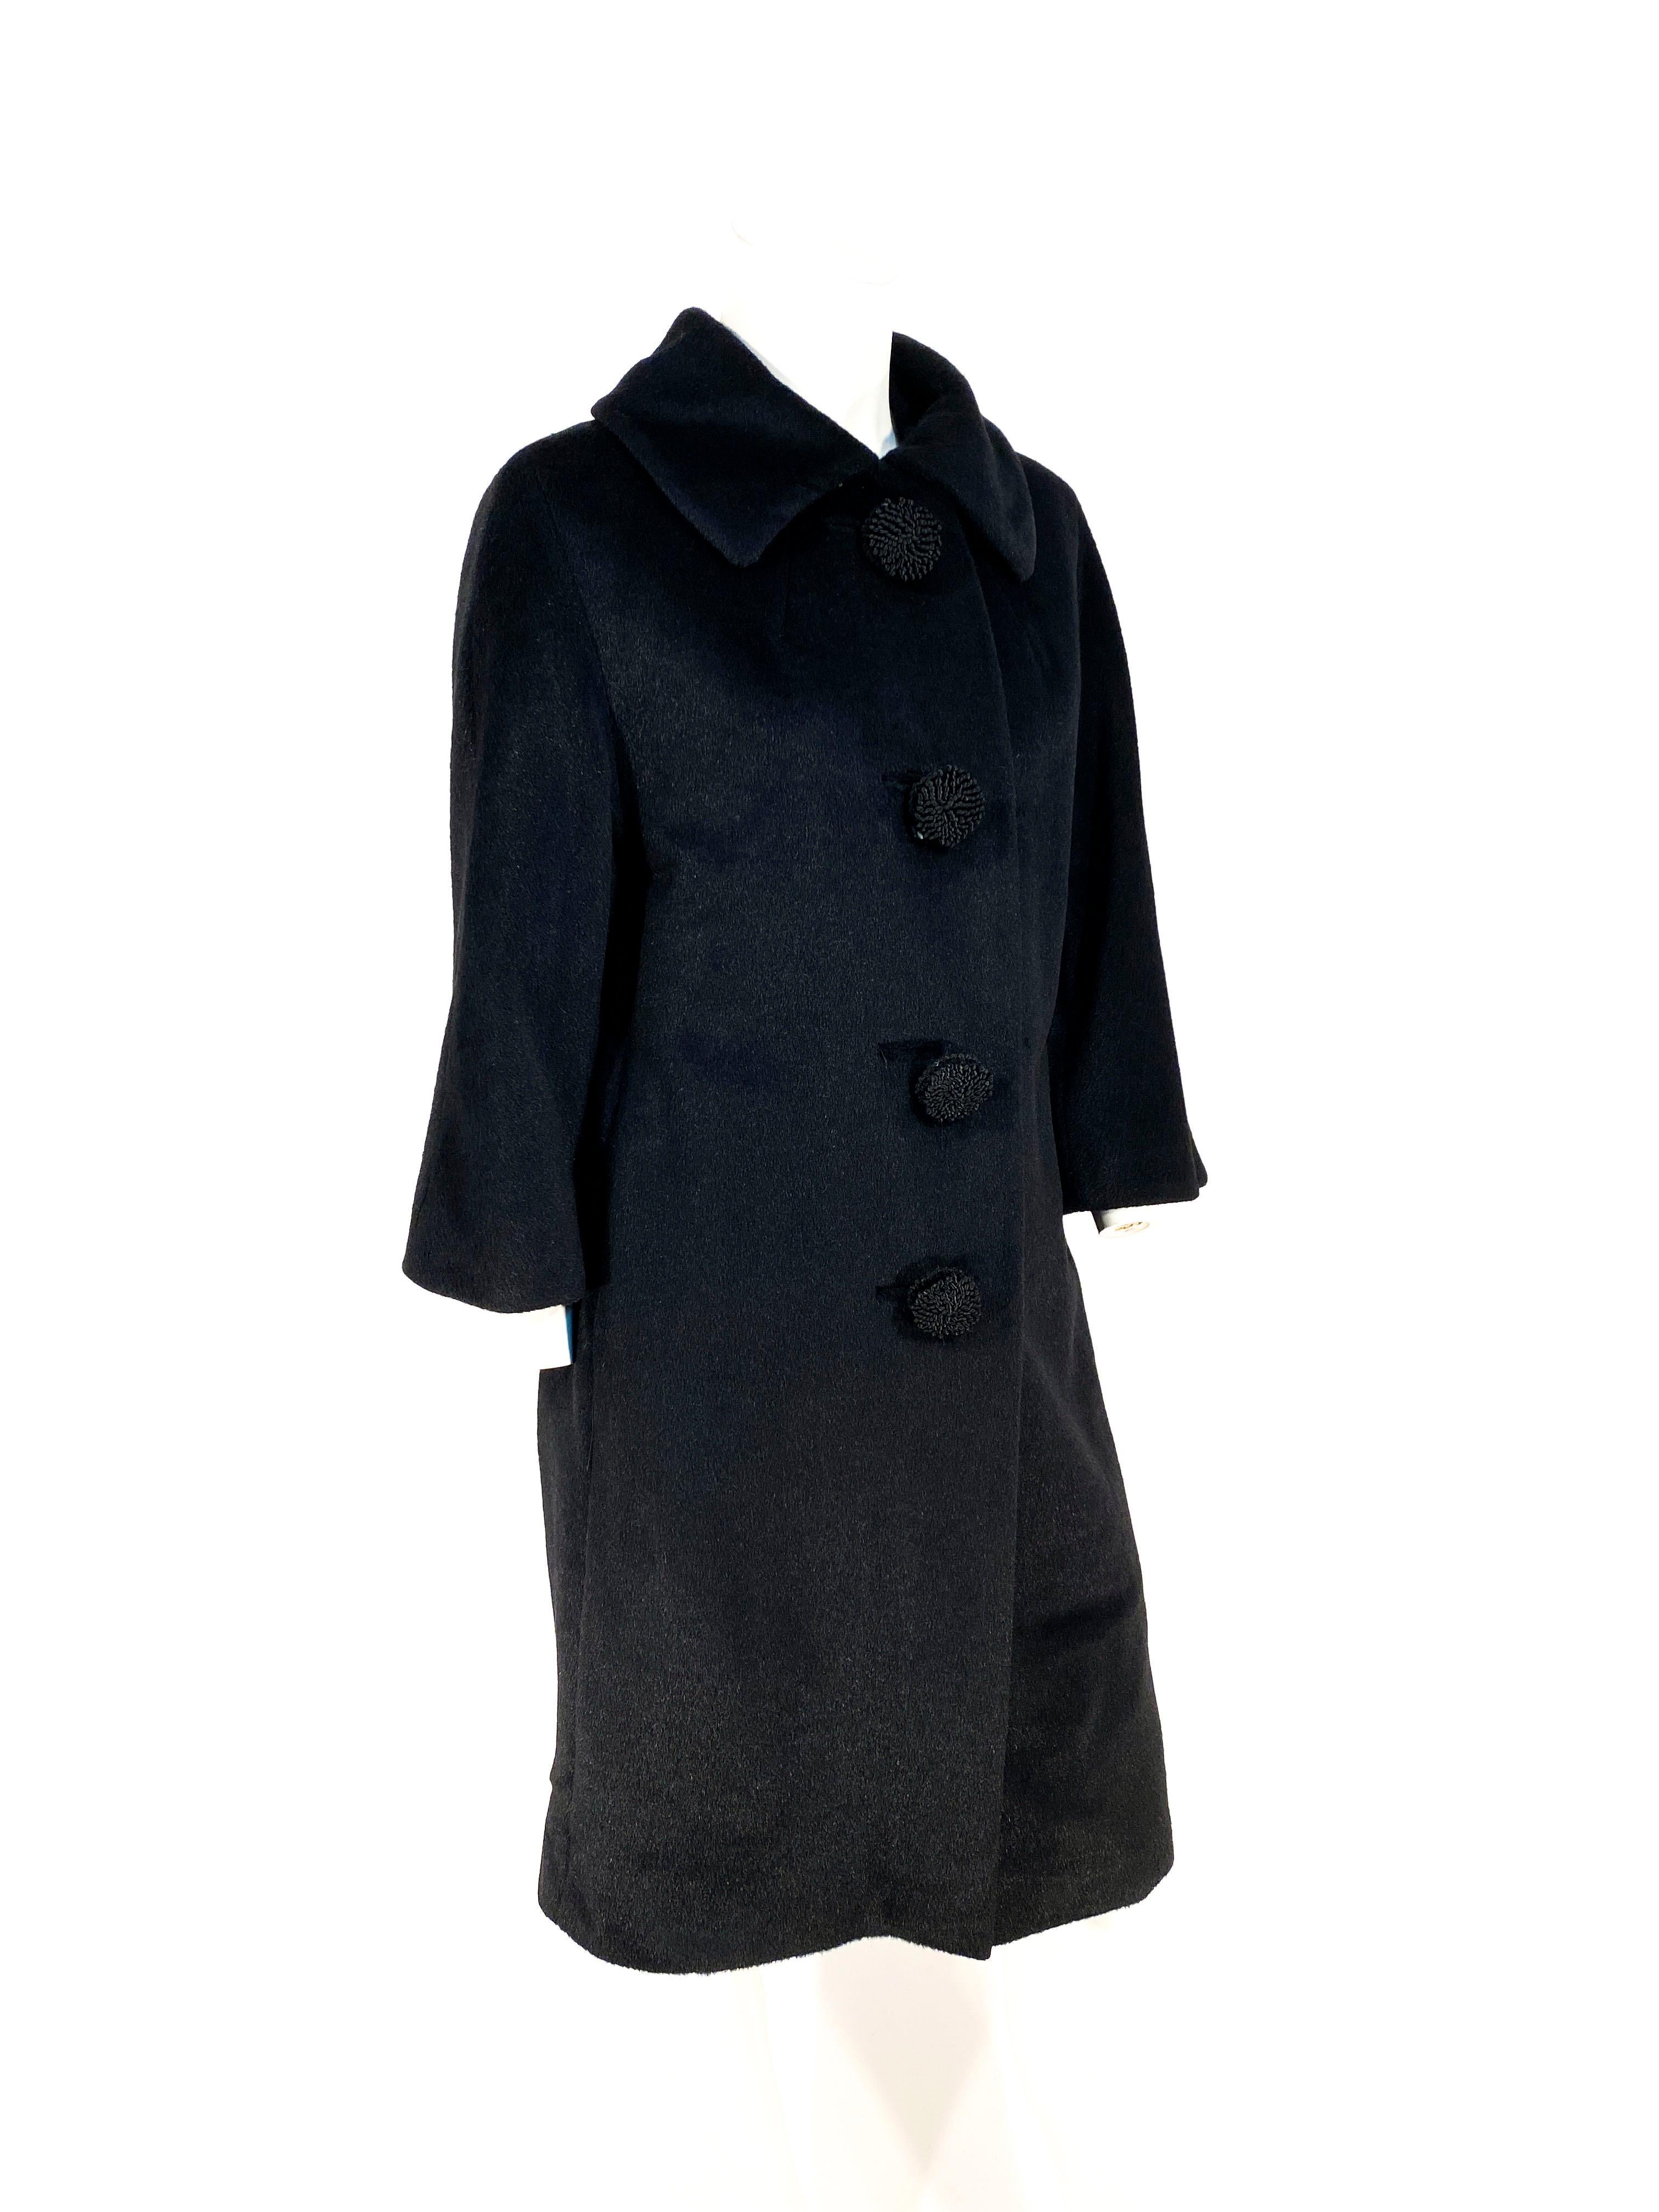 Women's 1960s Lilli Ann Black Cashmere Coat